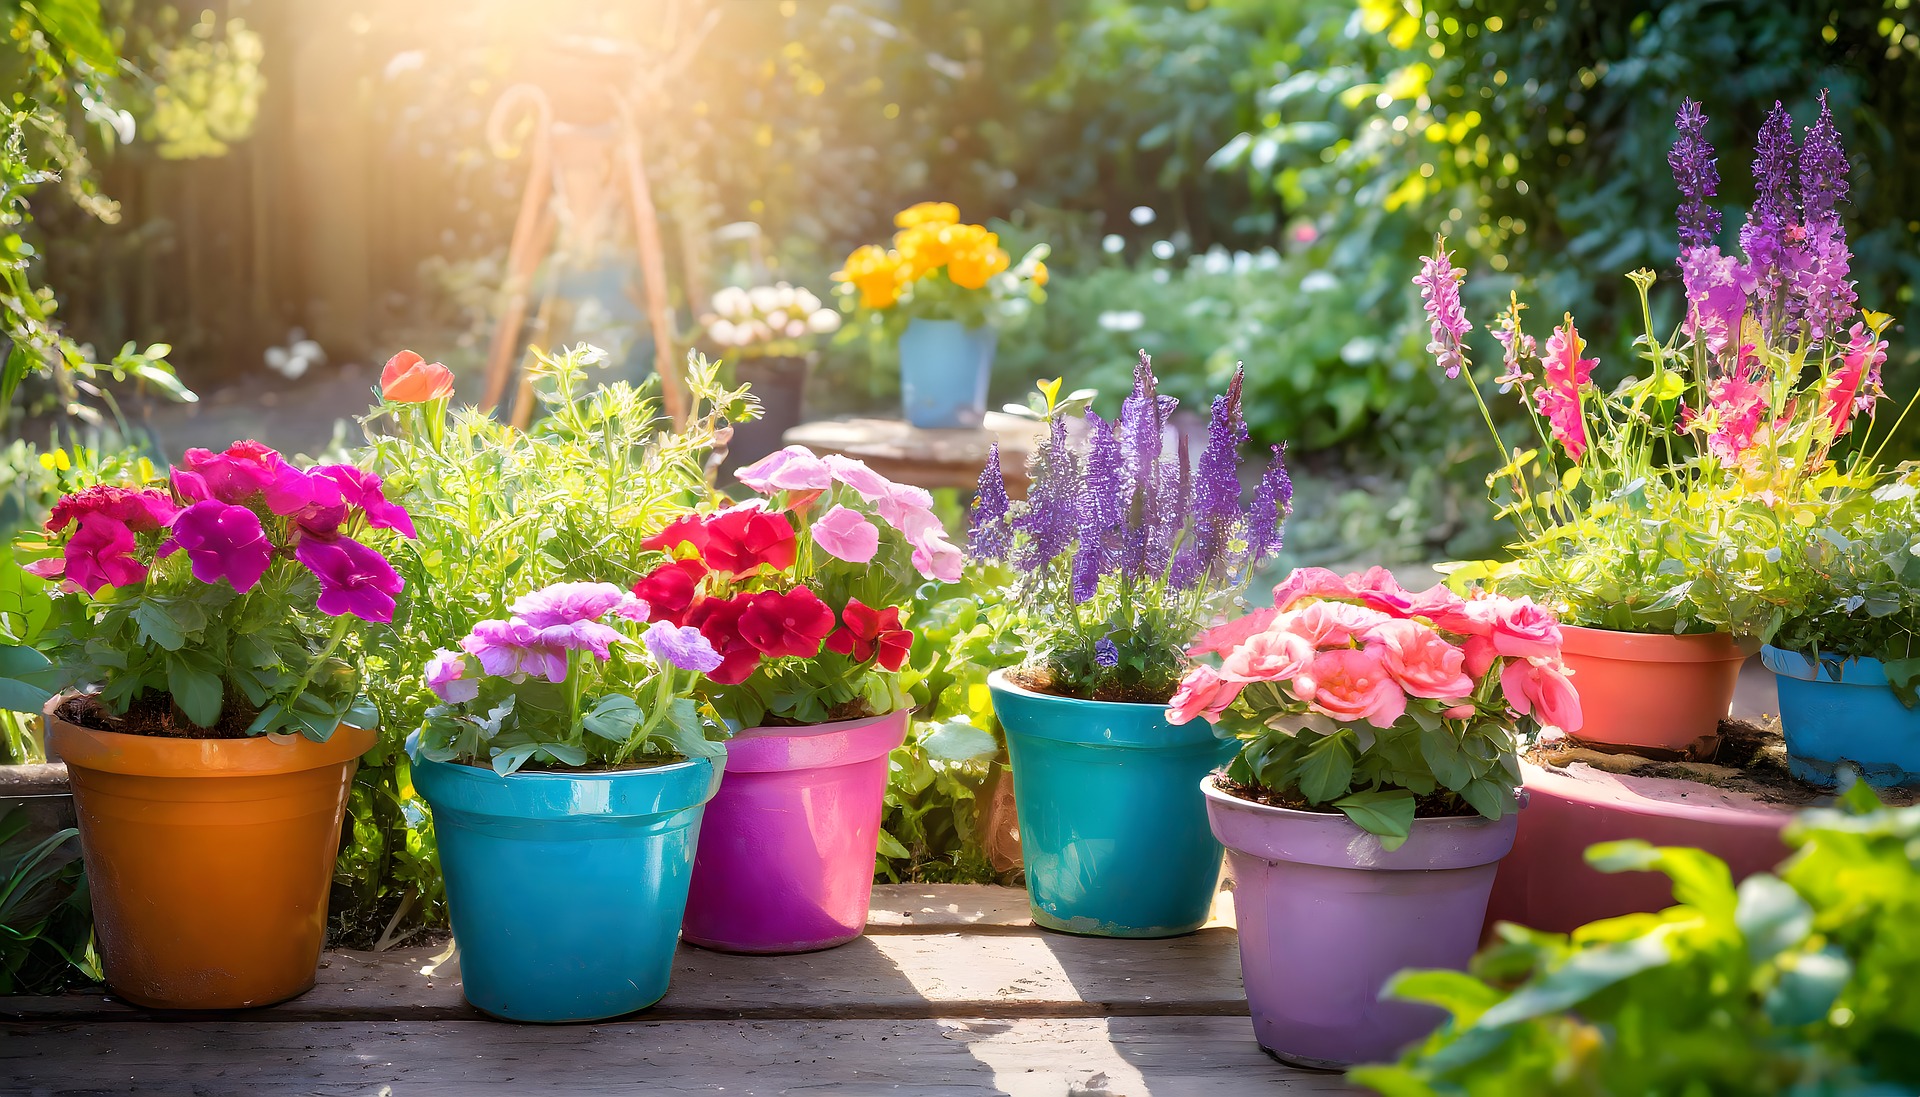 Fertilizer enriches bright garden blooms in colorful pots under warm sunlight.